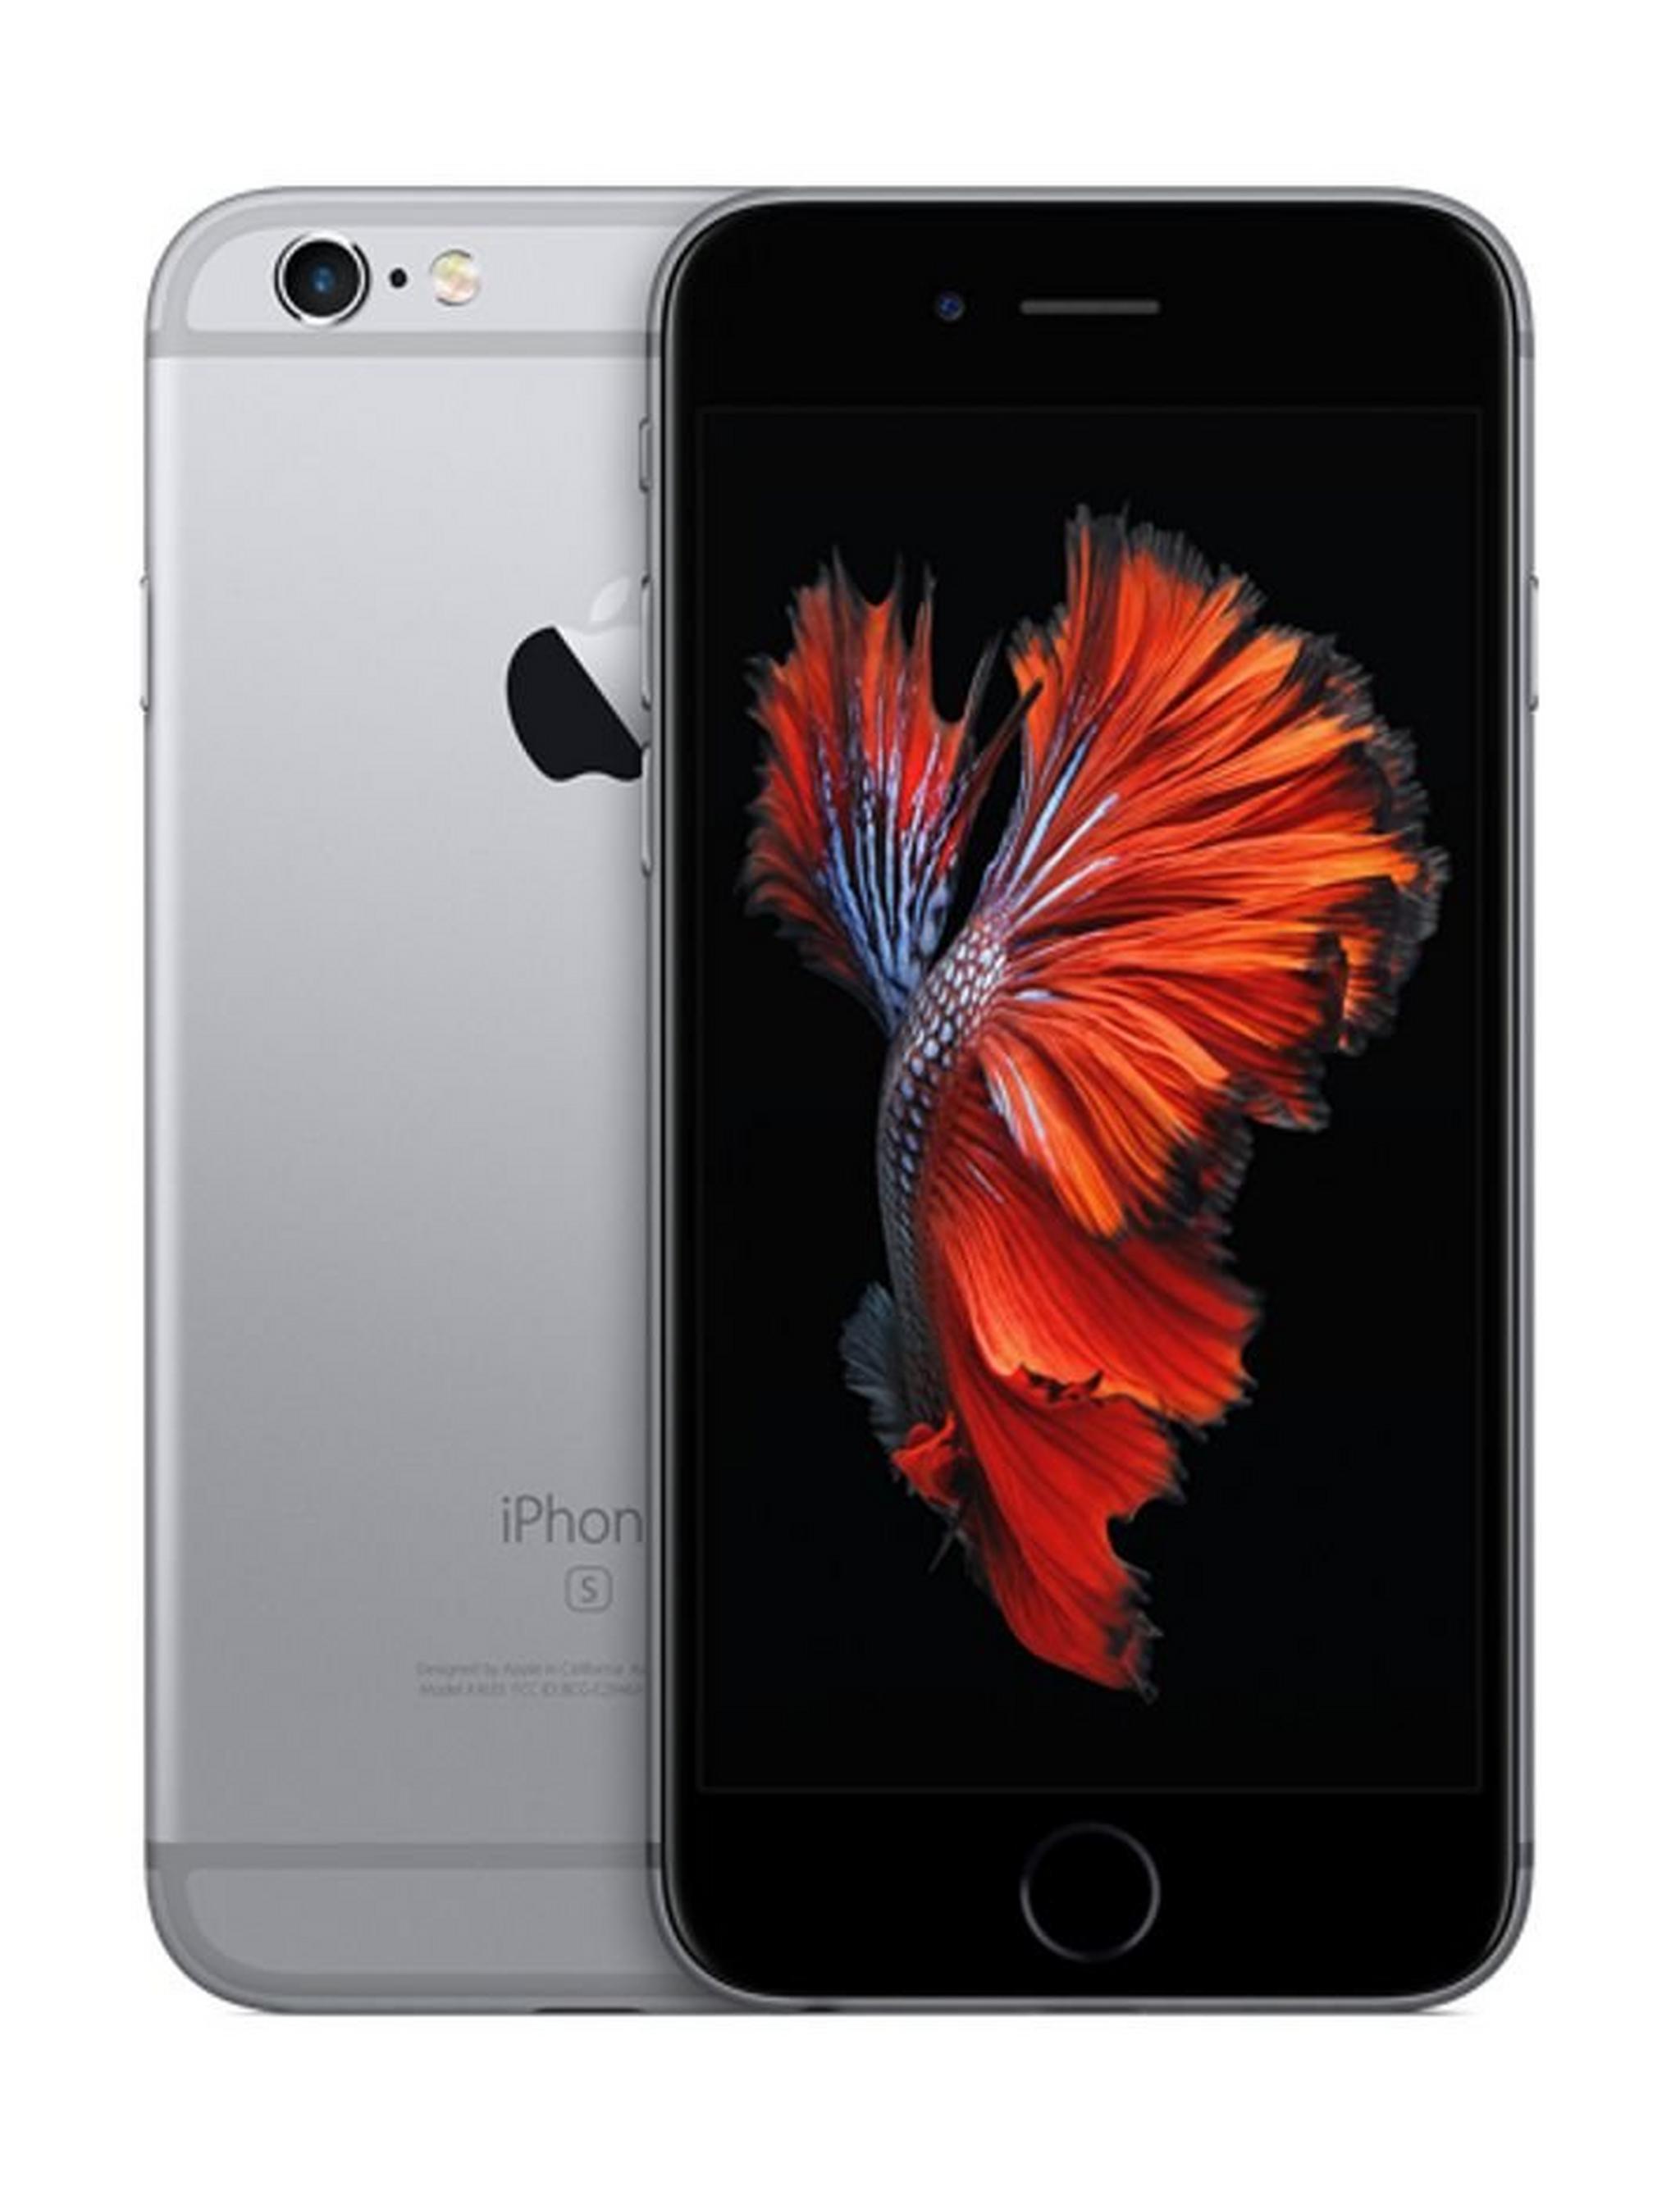 Apple iPhone 6S Plus 128GB 12MP 4G LTE 5.5-inch Smartphone - Grey